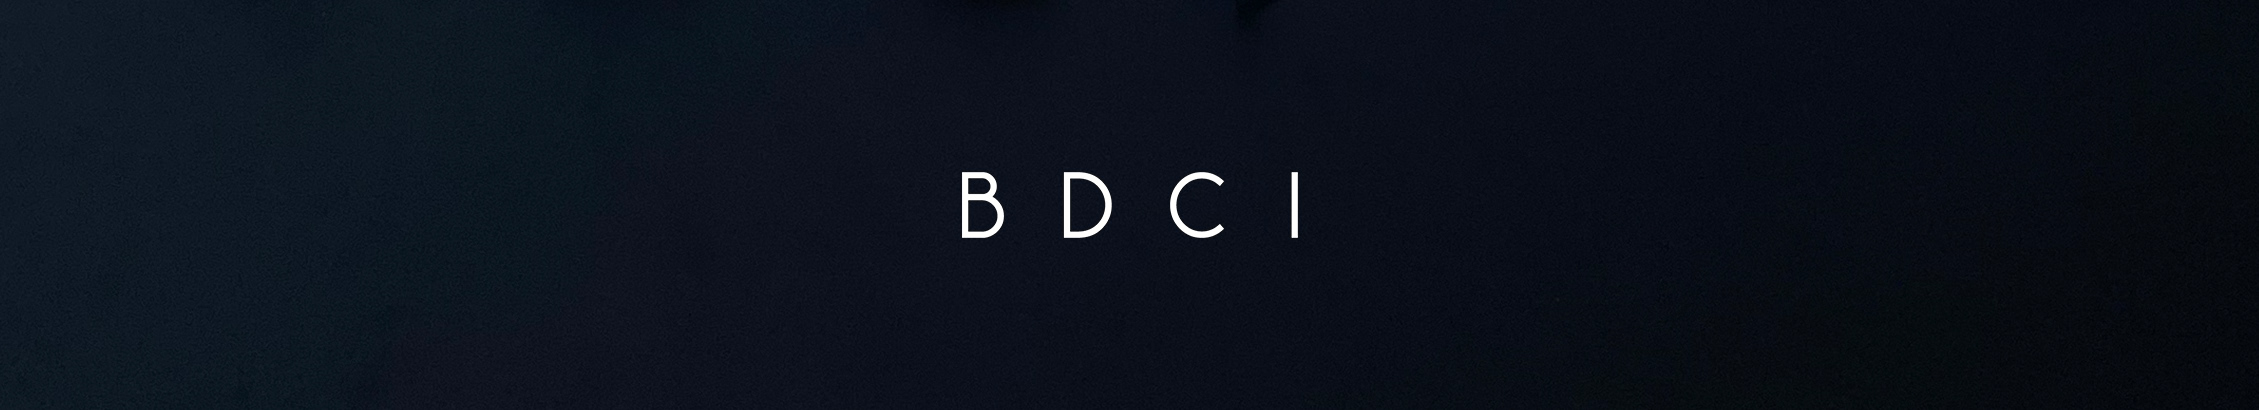 BDCI Design's profile banner